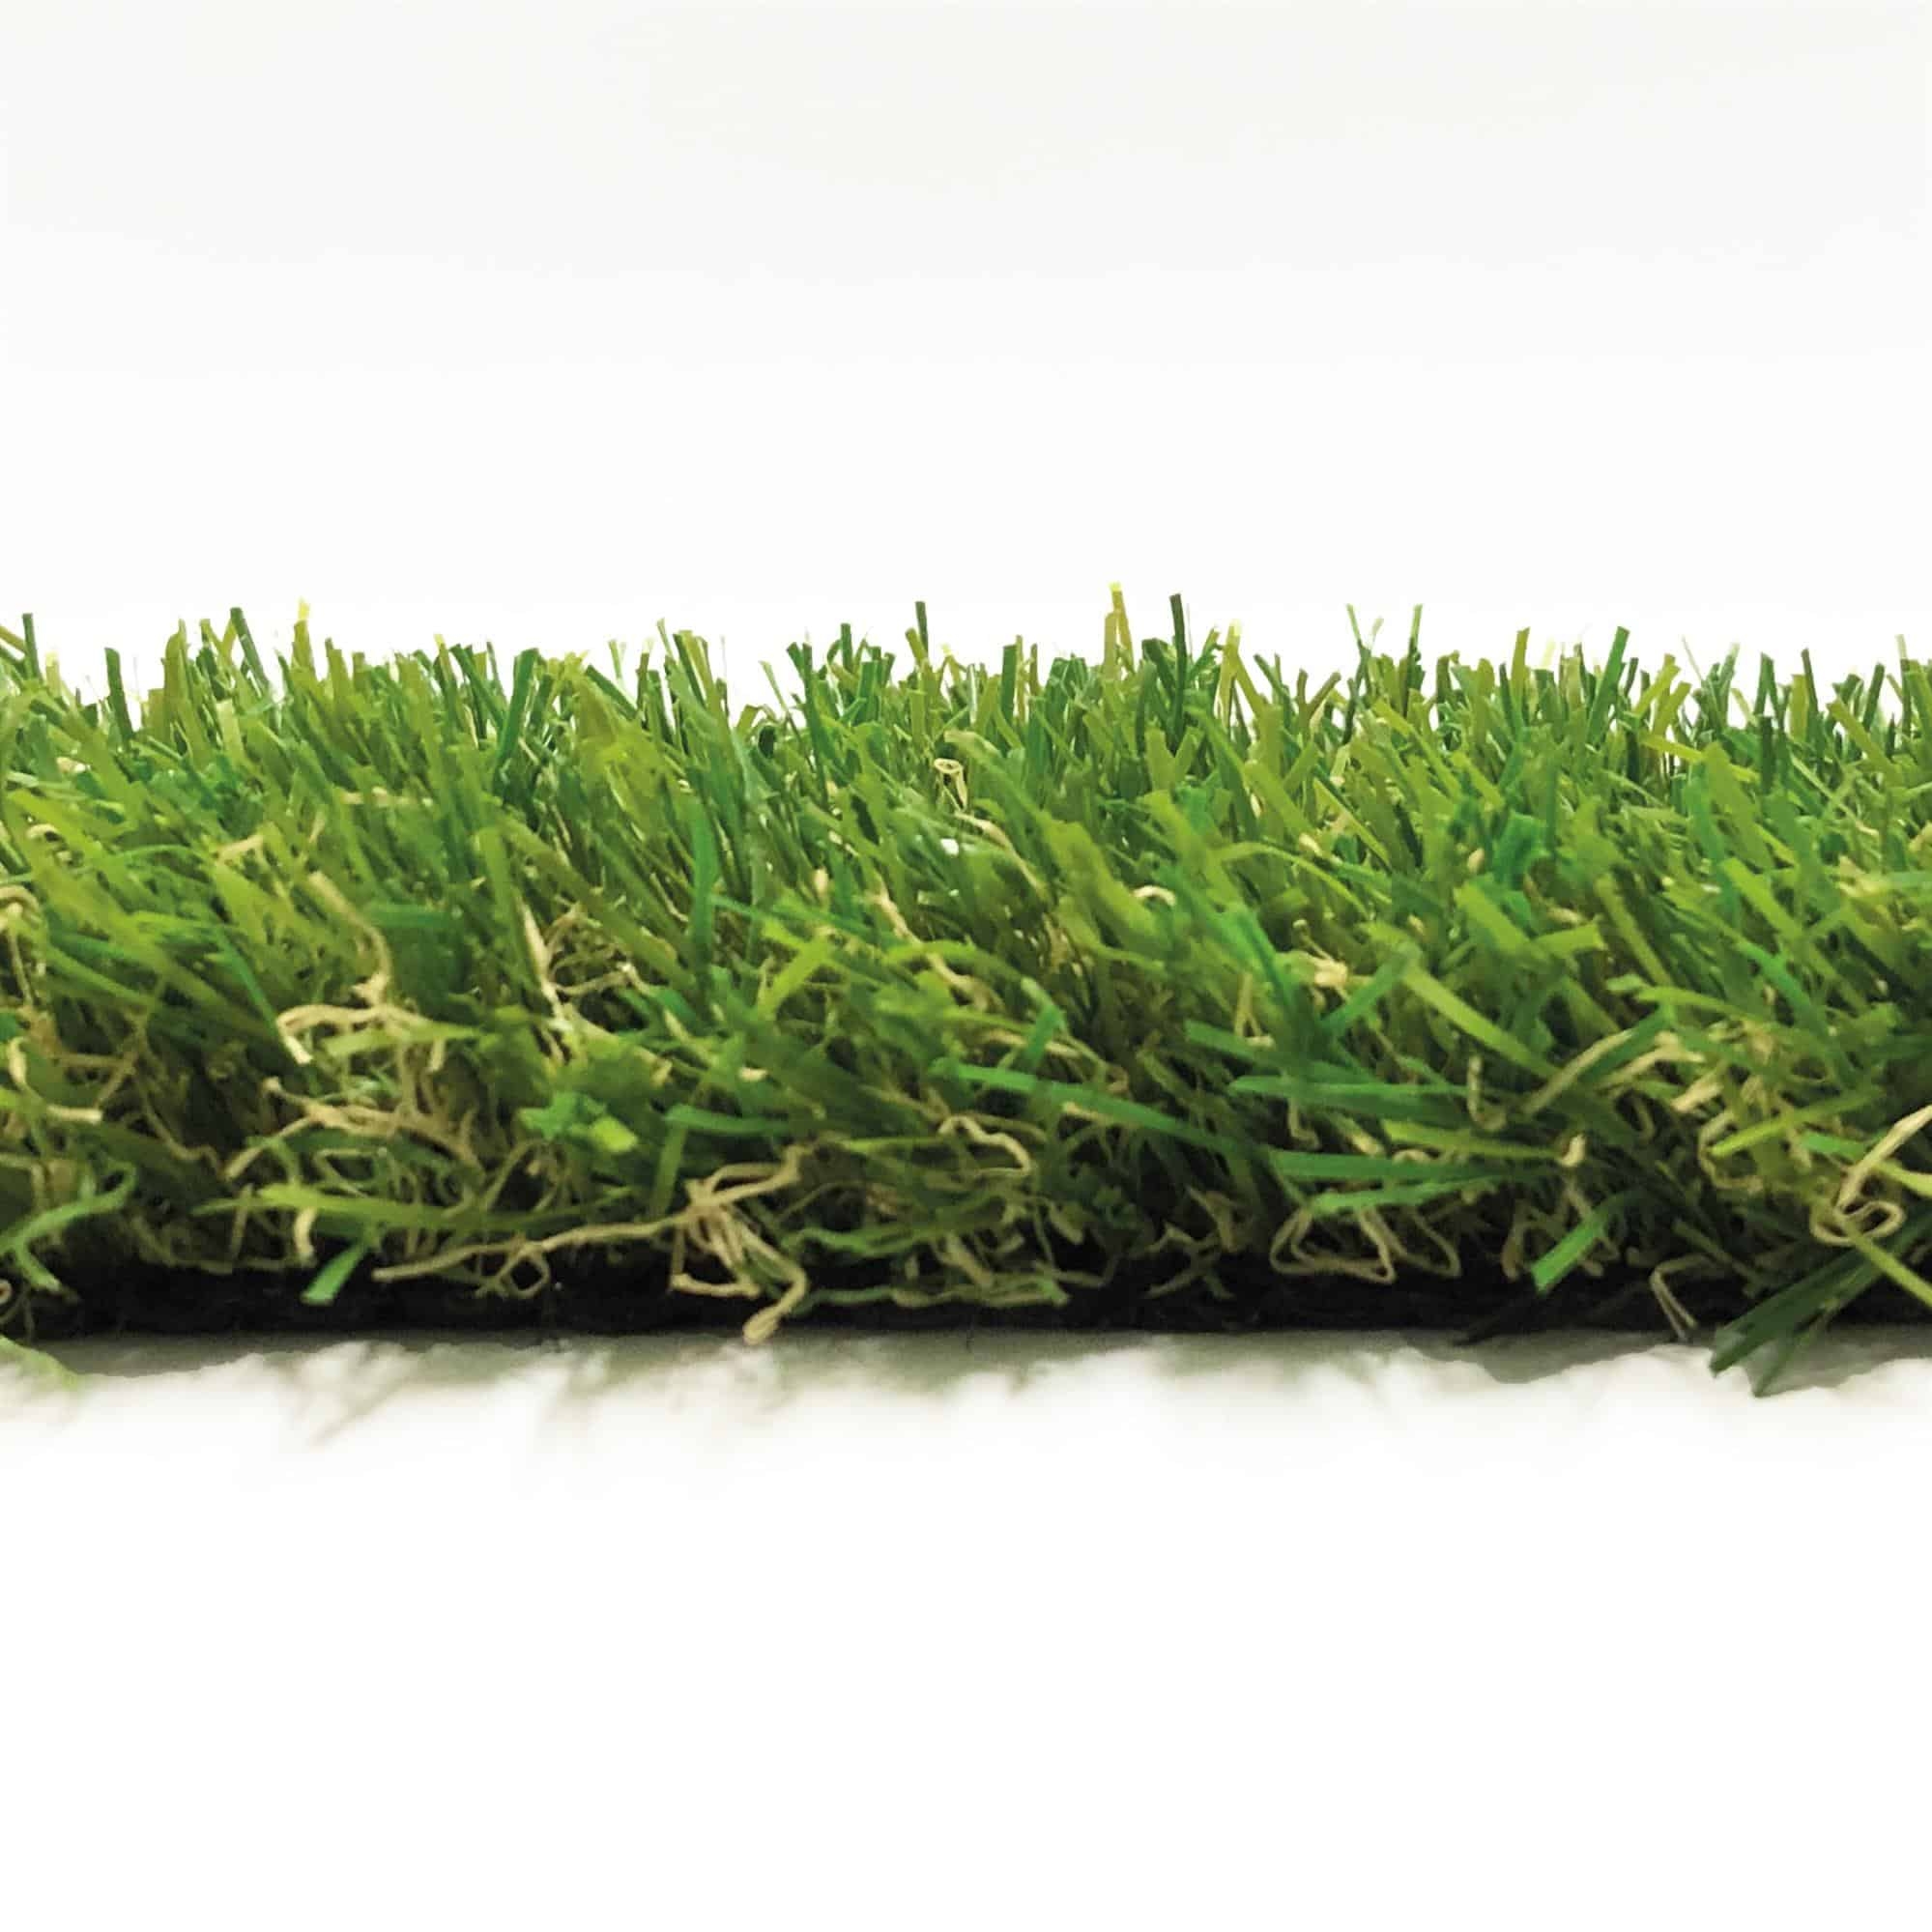 CORE Lawn Classic 30mm Artificial Grass | 2 x 25m (Full Roll)